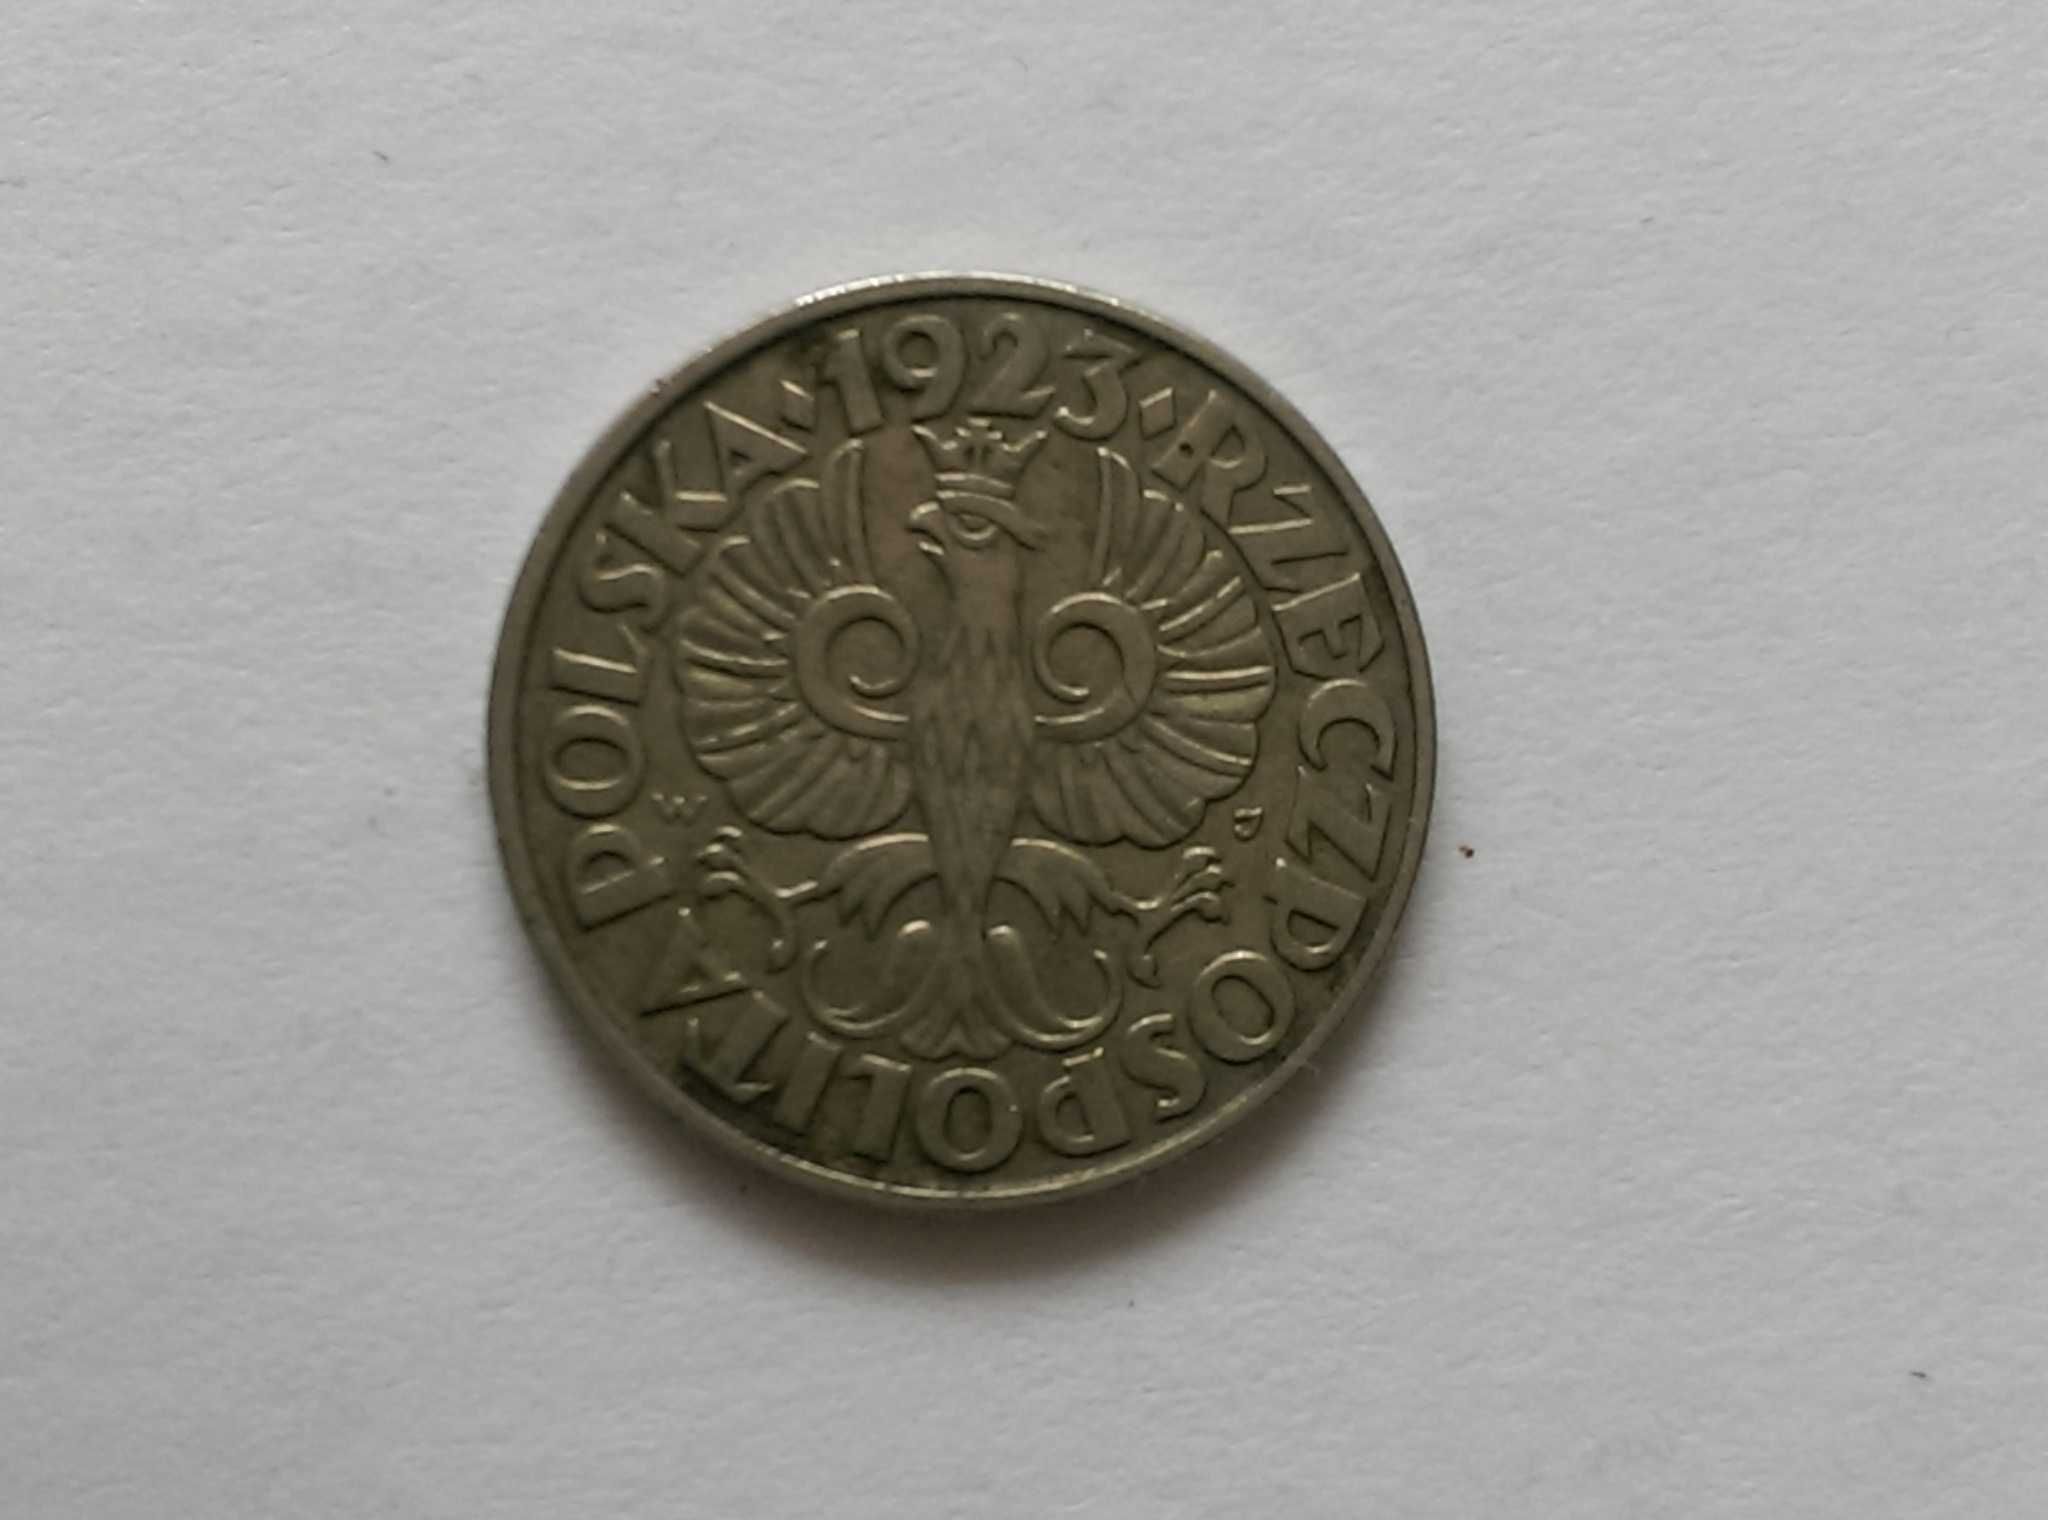 20 gr 1923, 50 gr, 2 zł, 5 zł moneta Krk